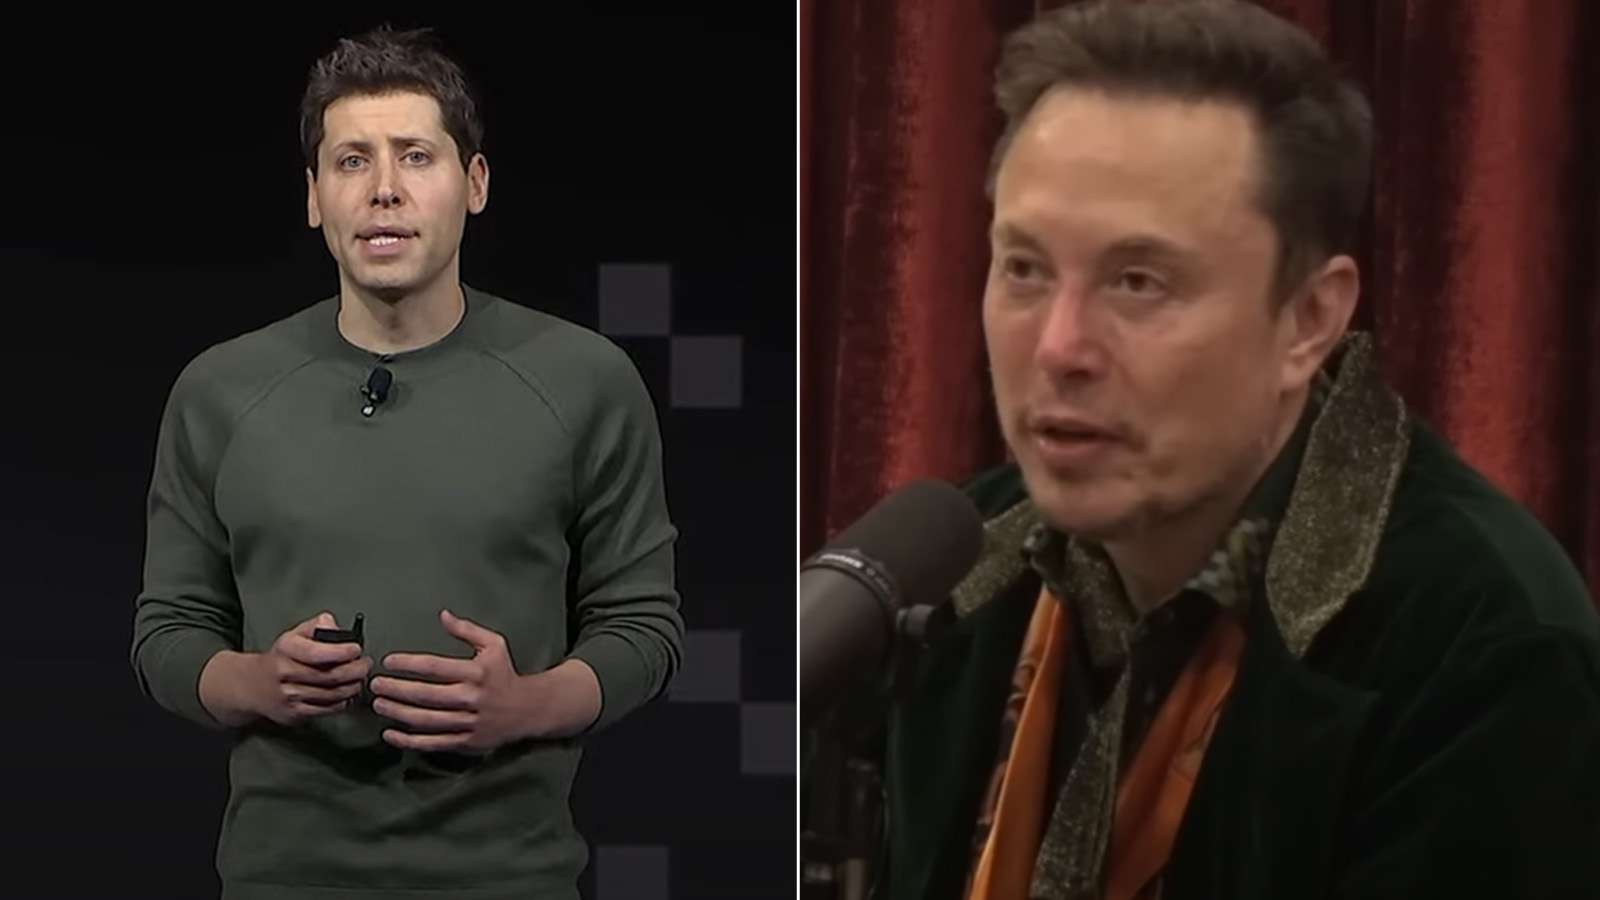 Sam Altman on left, Elon musk on Right